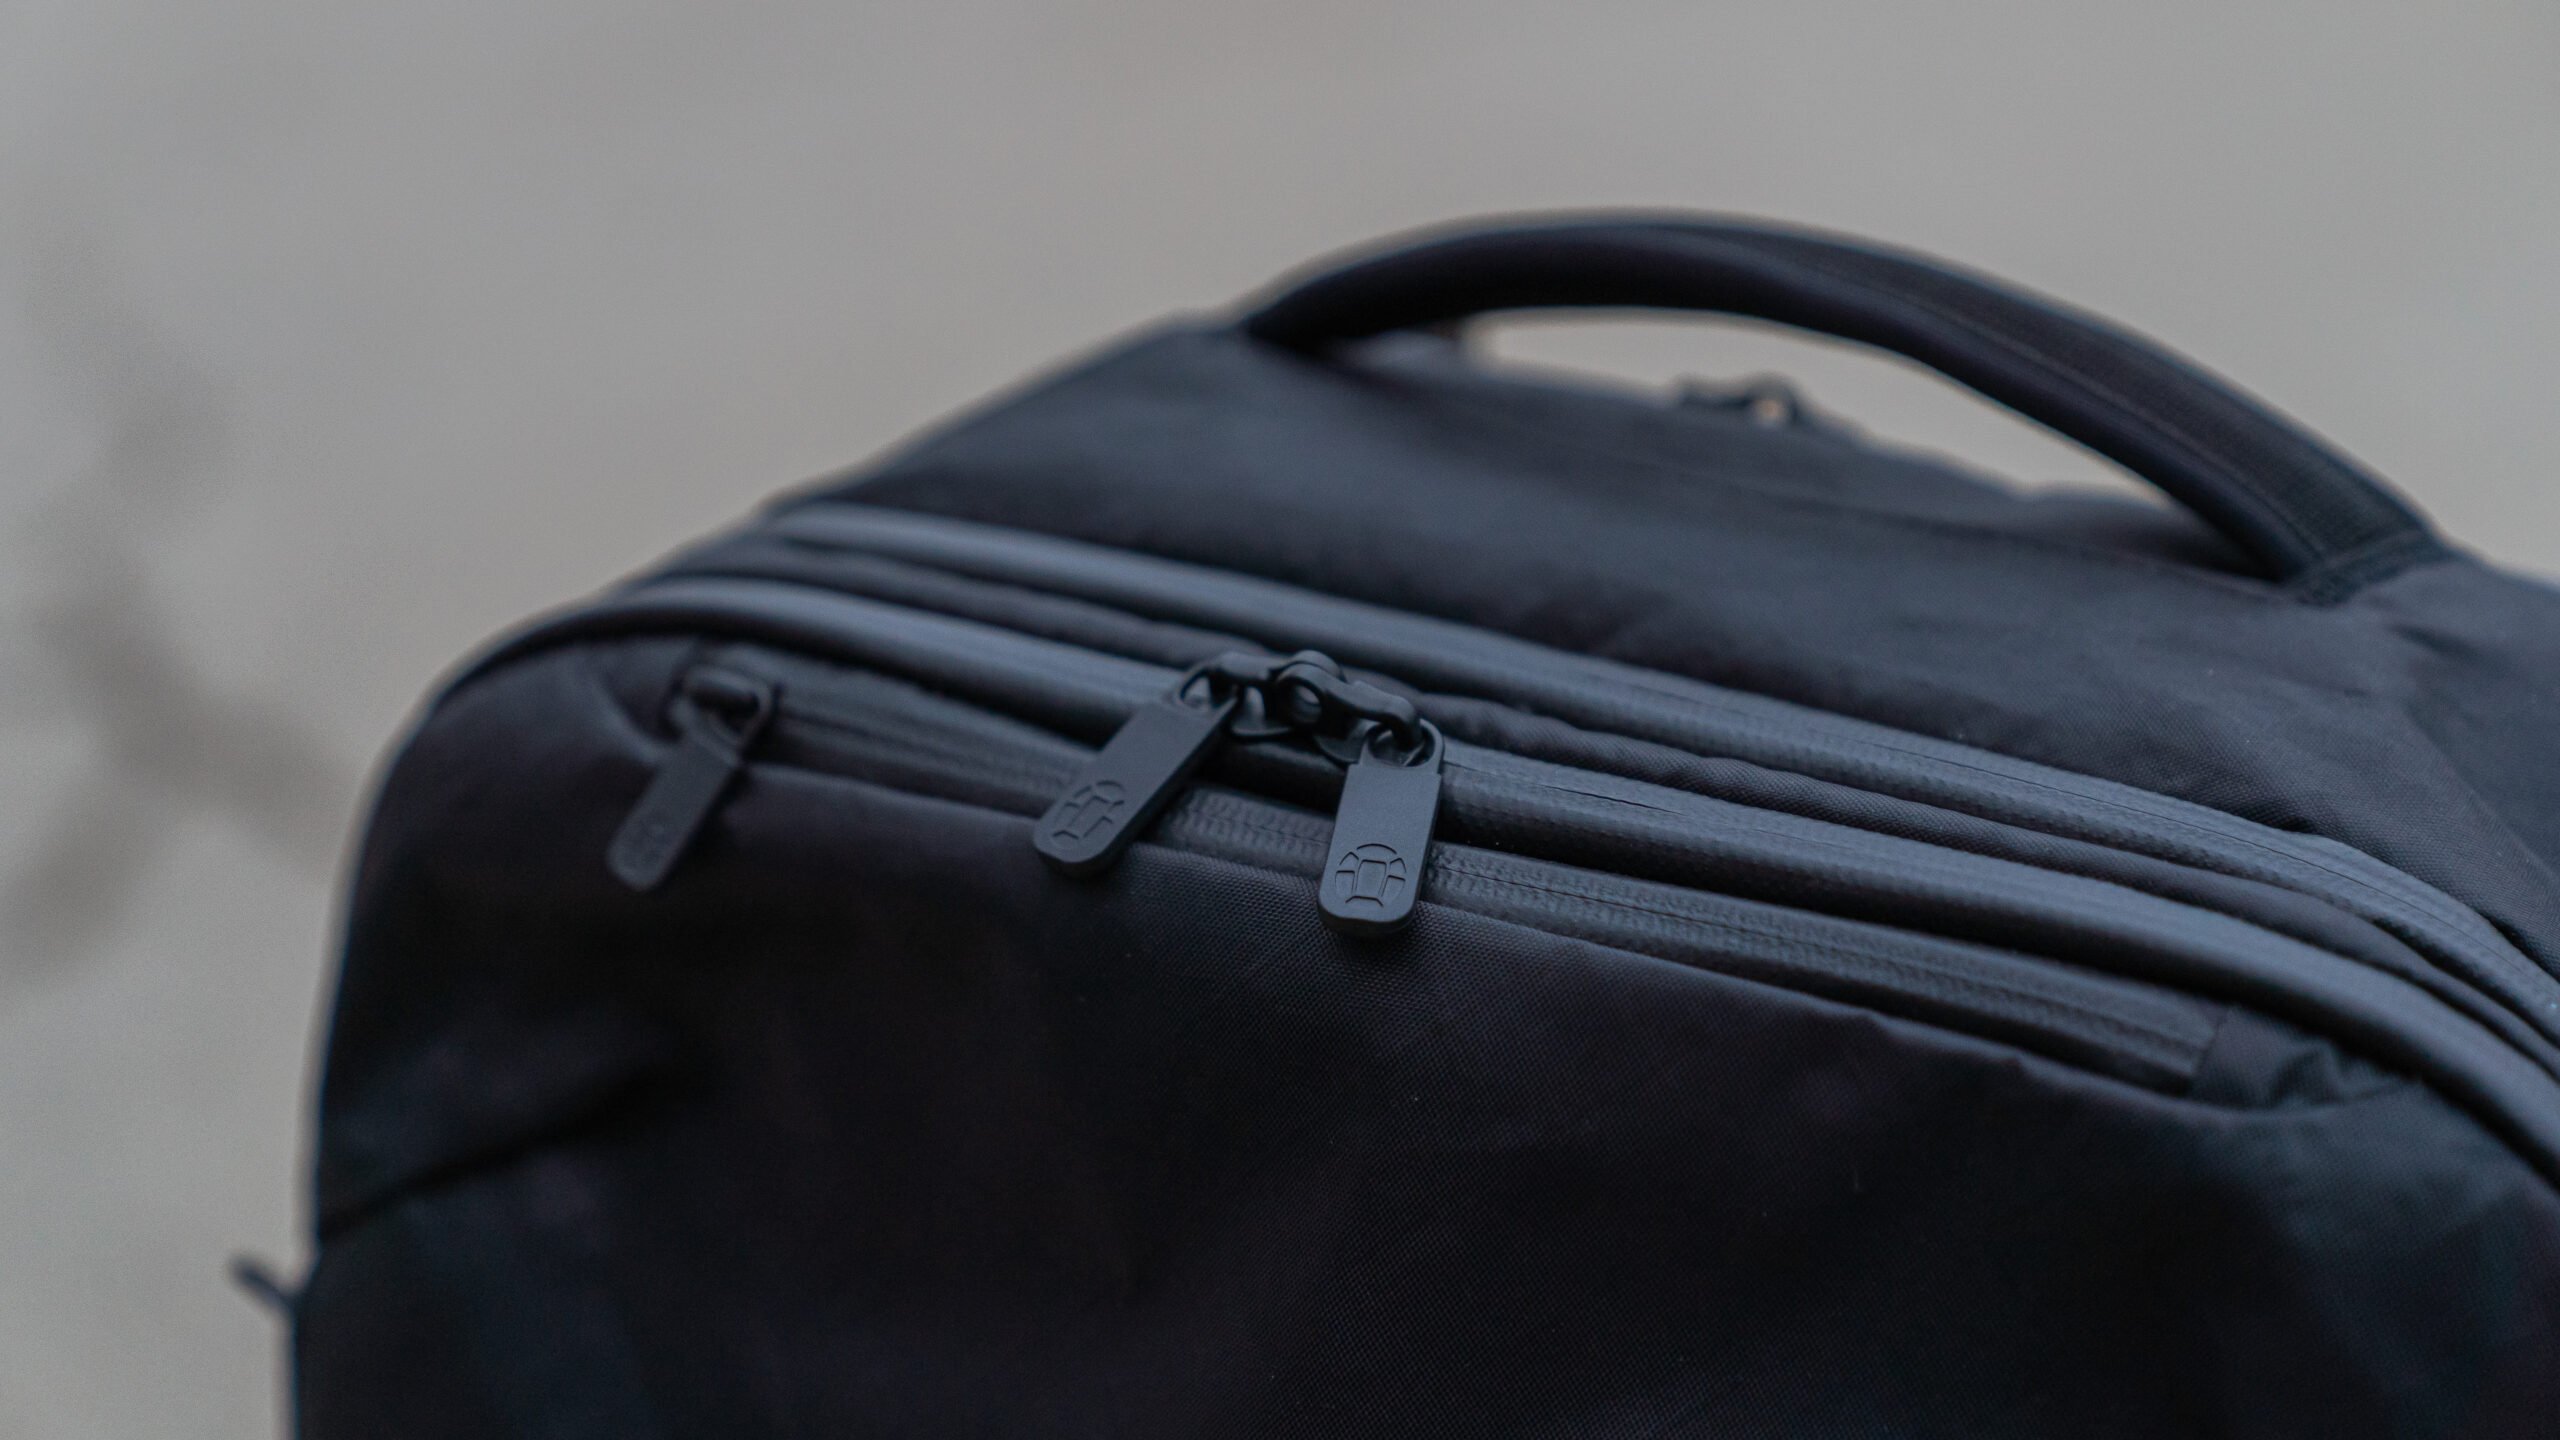 tortuga travel backpack